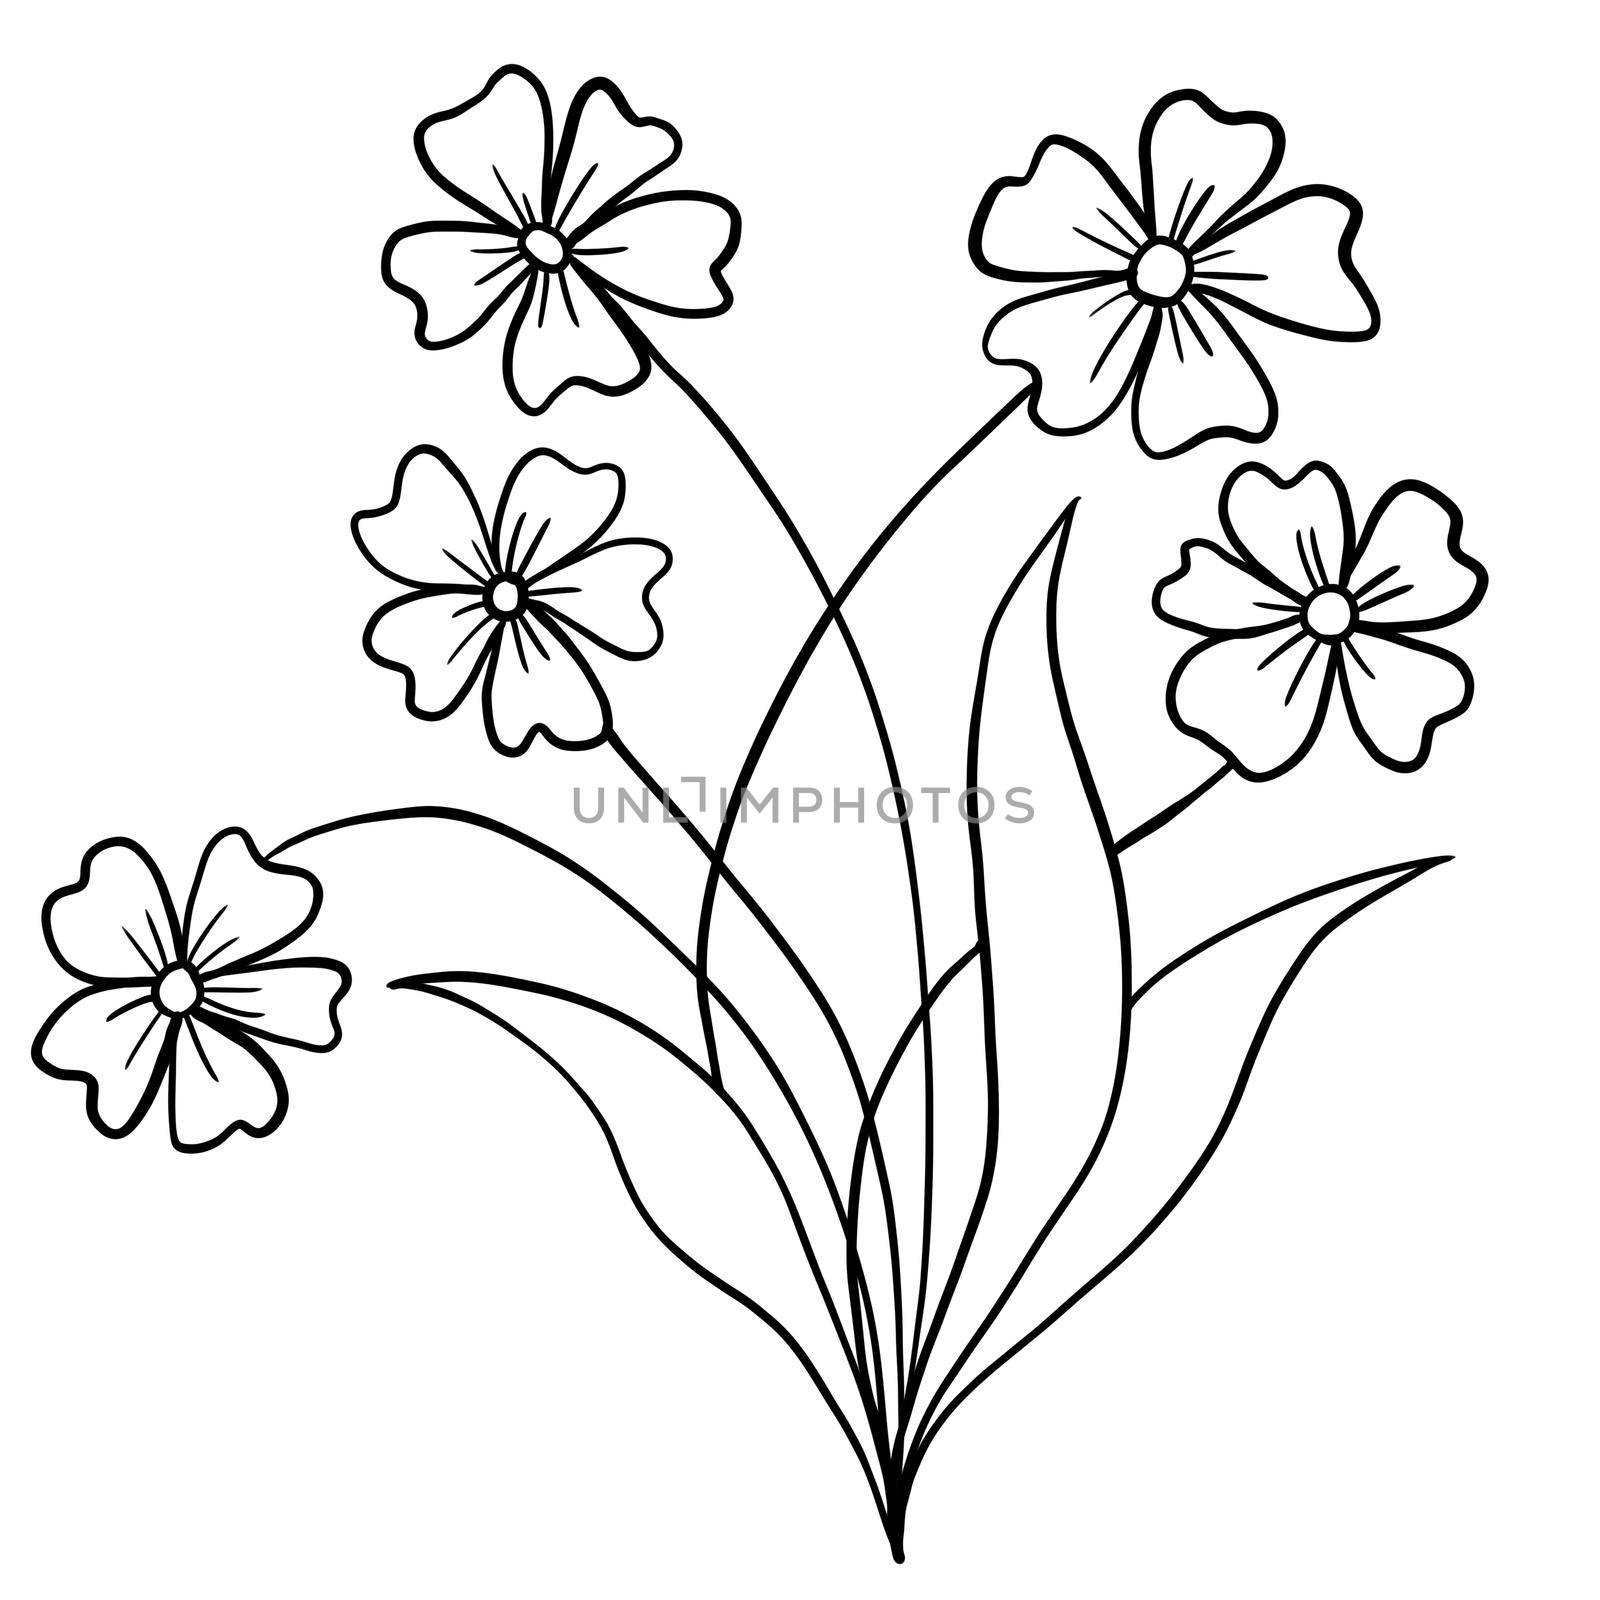 Hand drawn floral flower leaves illustration, black white elegant wedding ornament, Line art minimalism tatoo style design summer spring nature branch foliage blossom. by Lagmar